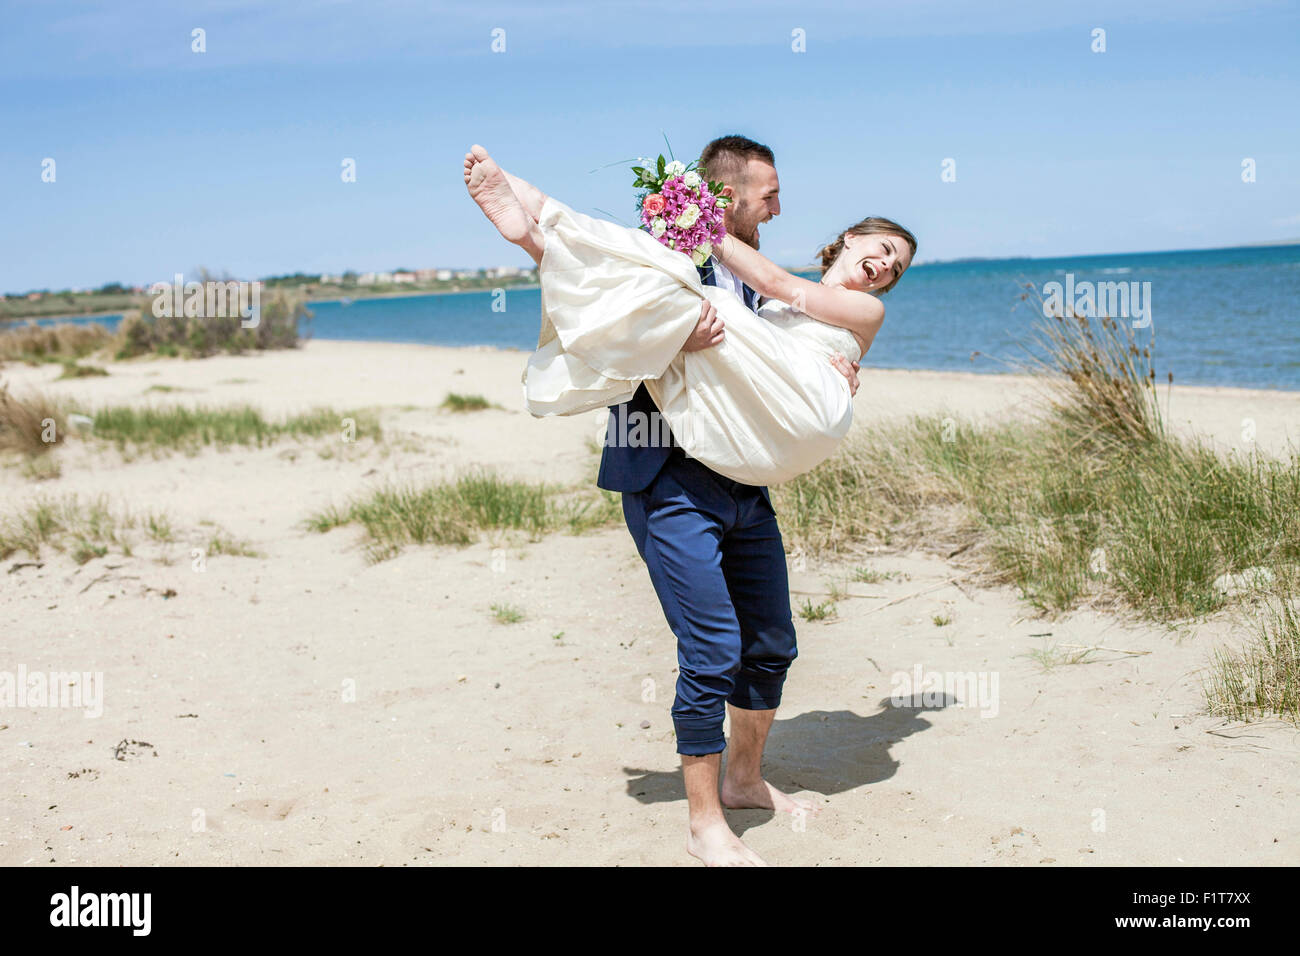 Bridegroom carrying bride on beach Stock Photo